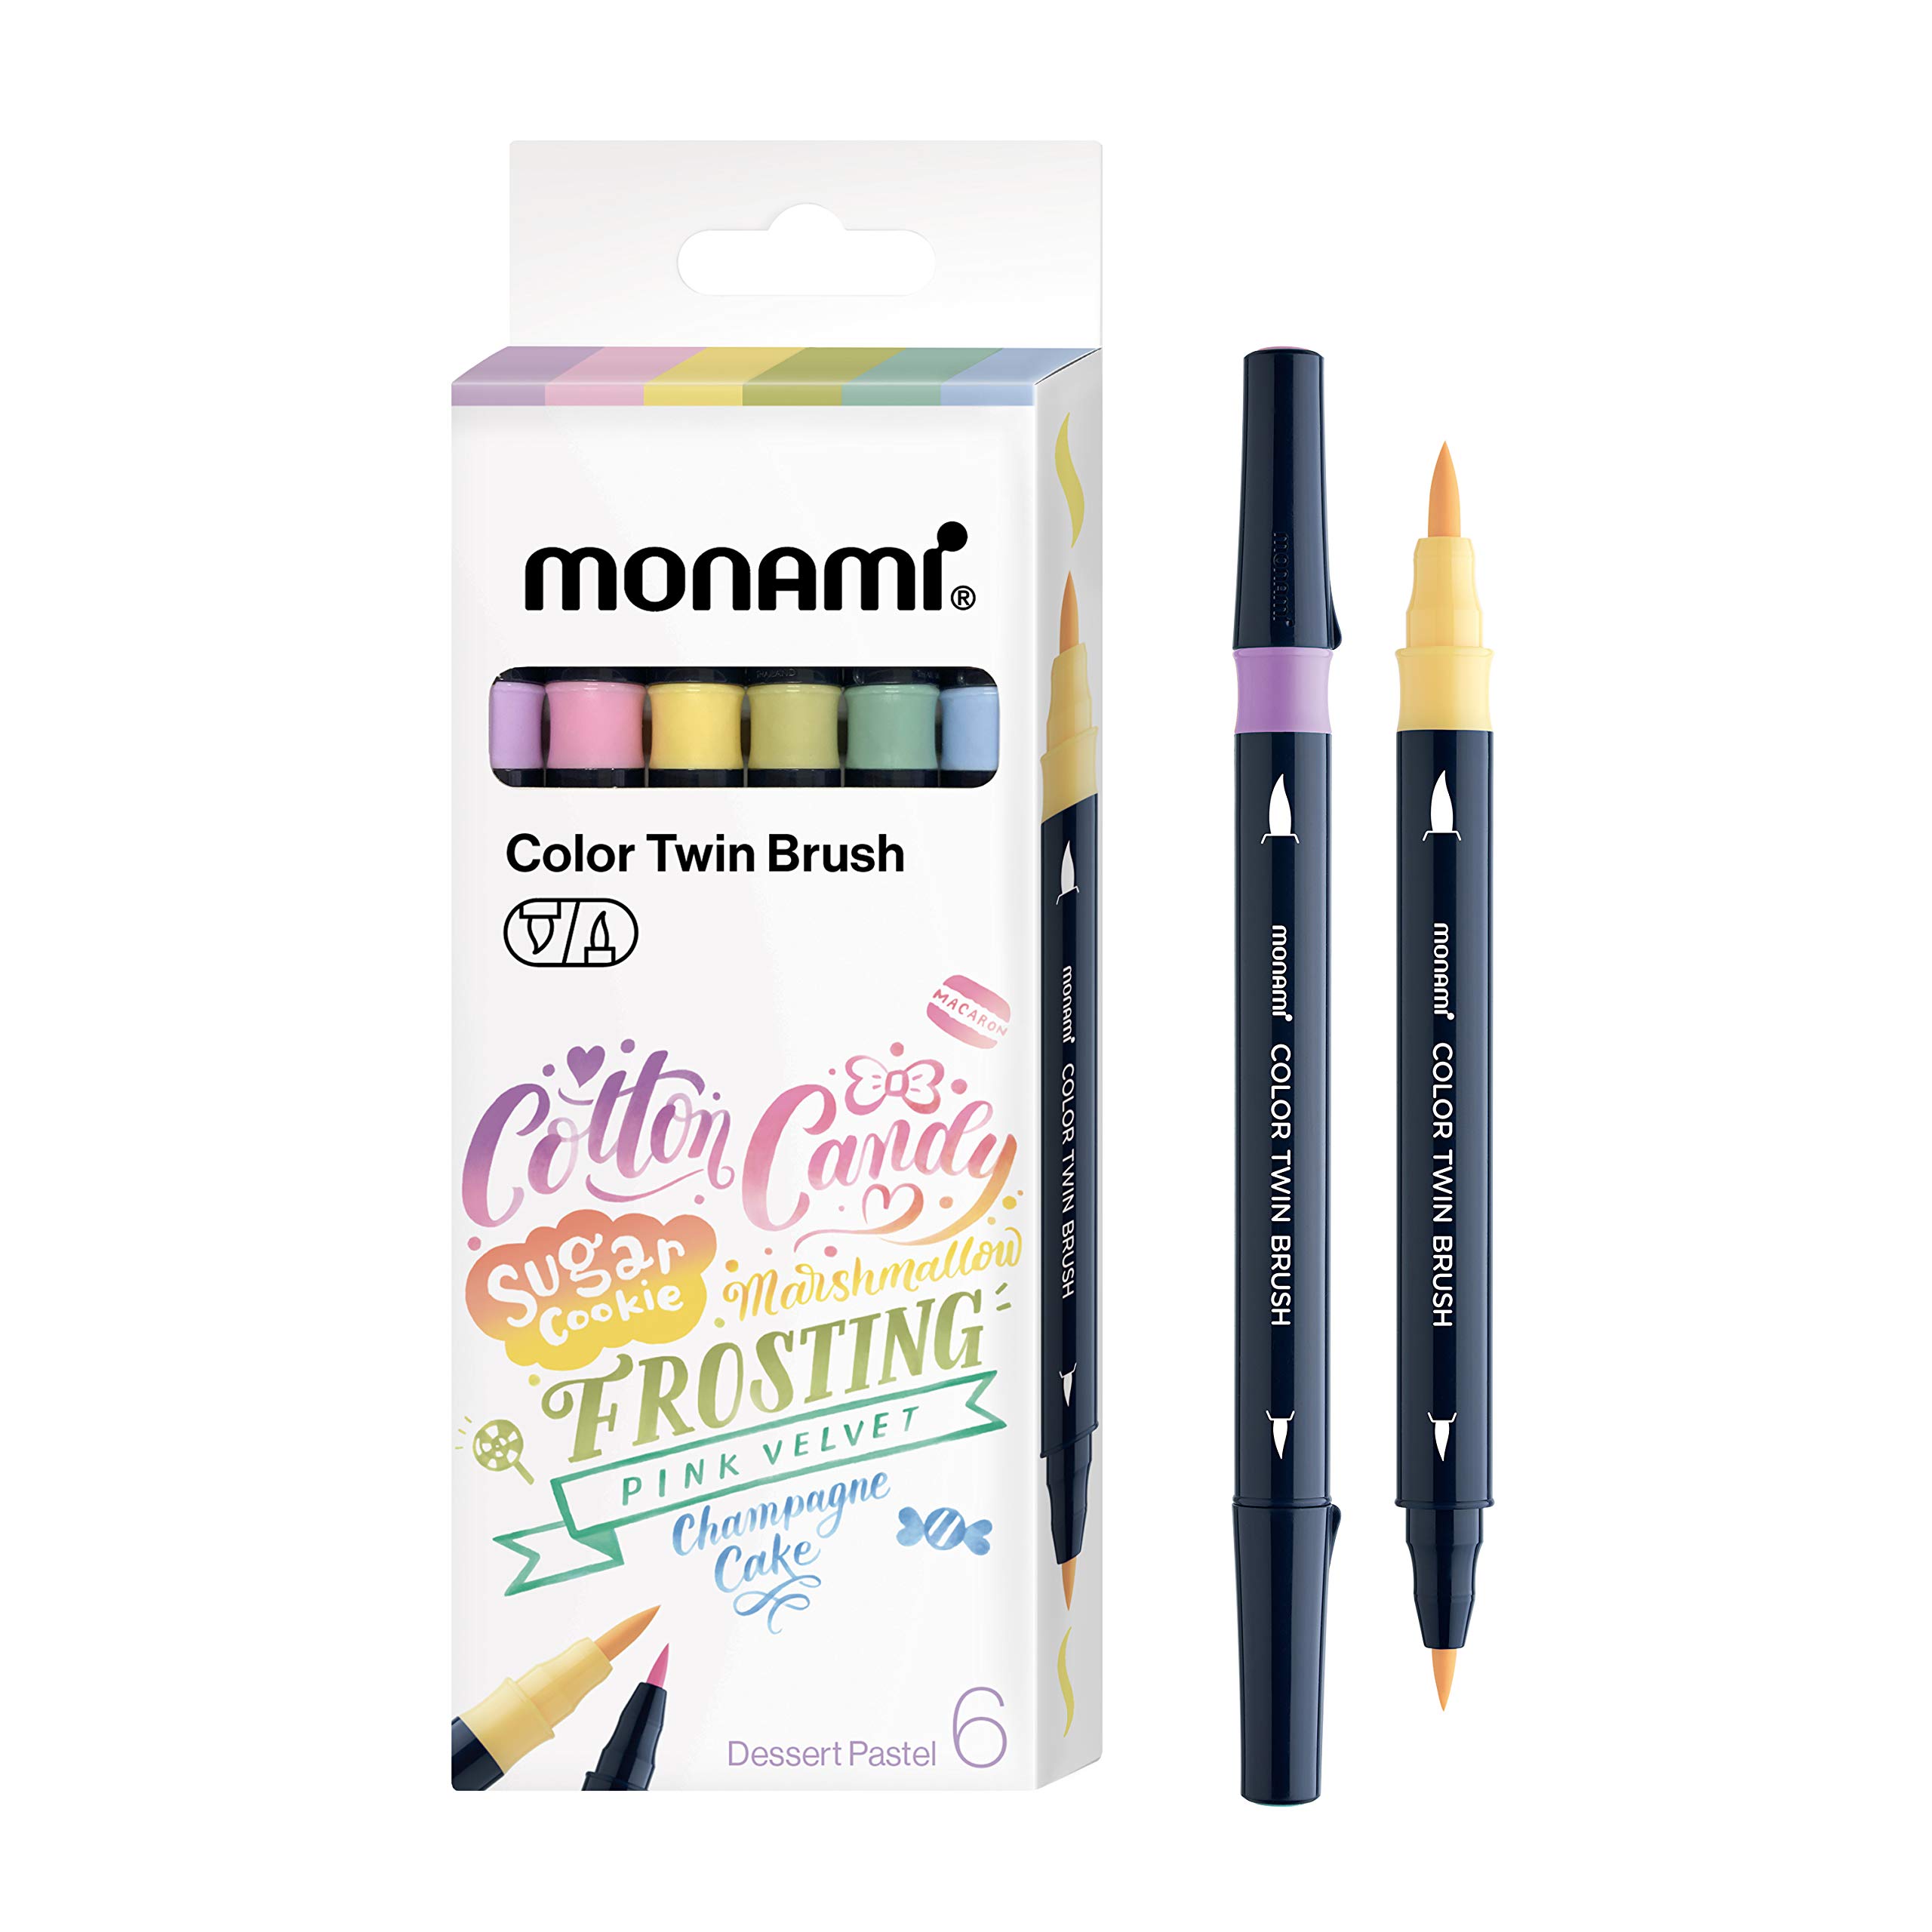 Mua MONAMI Color Twin Brush Dual Brush Pen Double Tipped Fine & Medium  Marker for Coloring/Calligraphy/Lettering, Dessert Pastel 6-Pack(Sunset  Nude,Salmon Nude,Peach,Chocolate Milk,Cream Latte,Chocolate) trên Amazon Mỹ  chính hãng 2023 | Giaonhan247